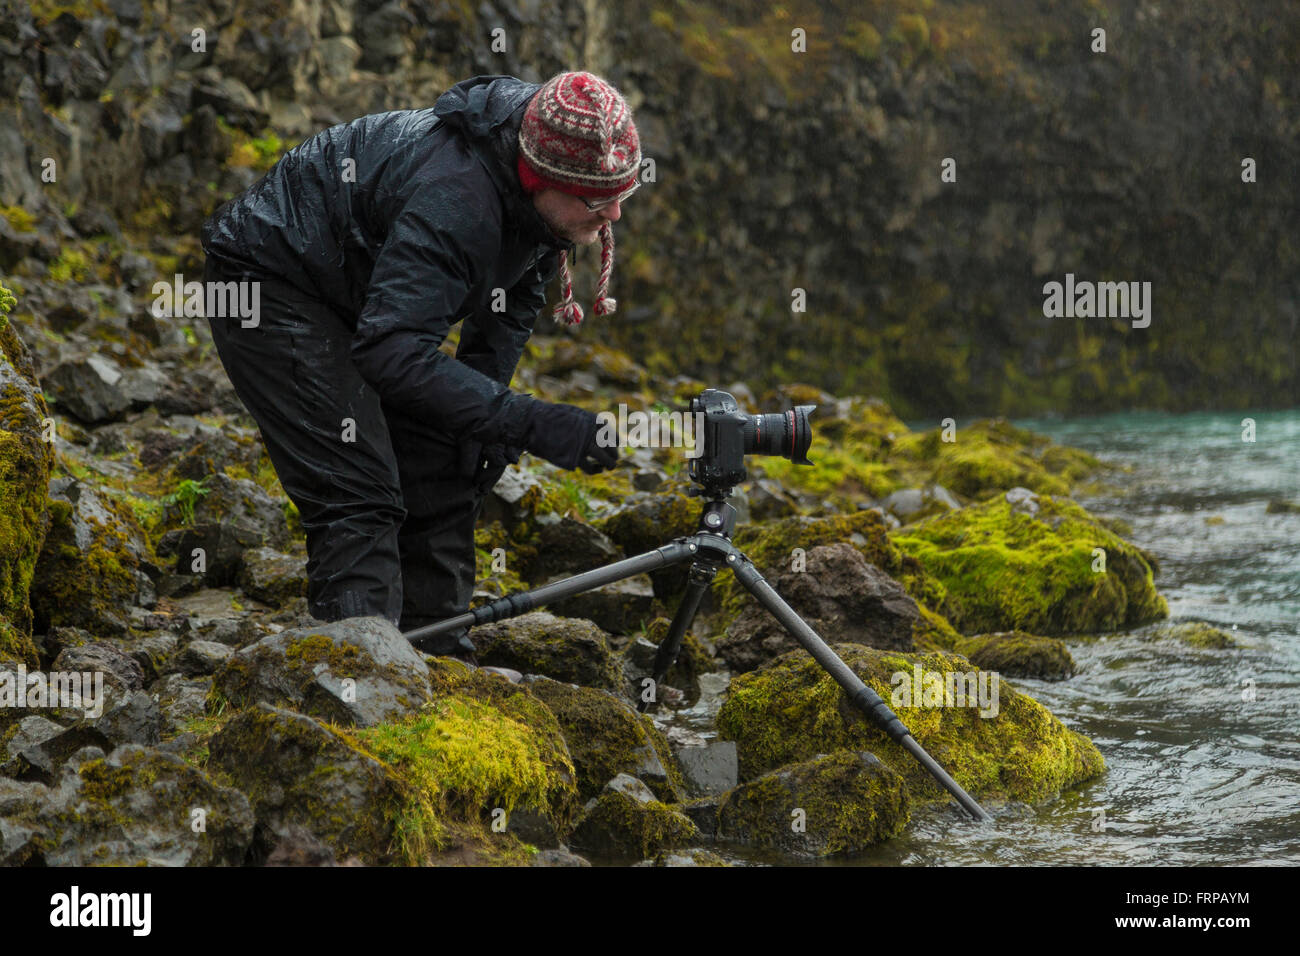 Photographer captures rainy Icelandic scene amognst moss-covered rocks Stock Photo